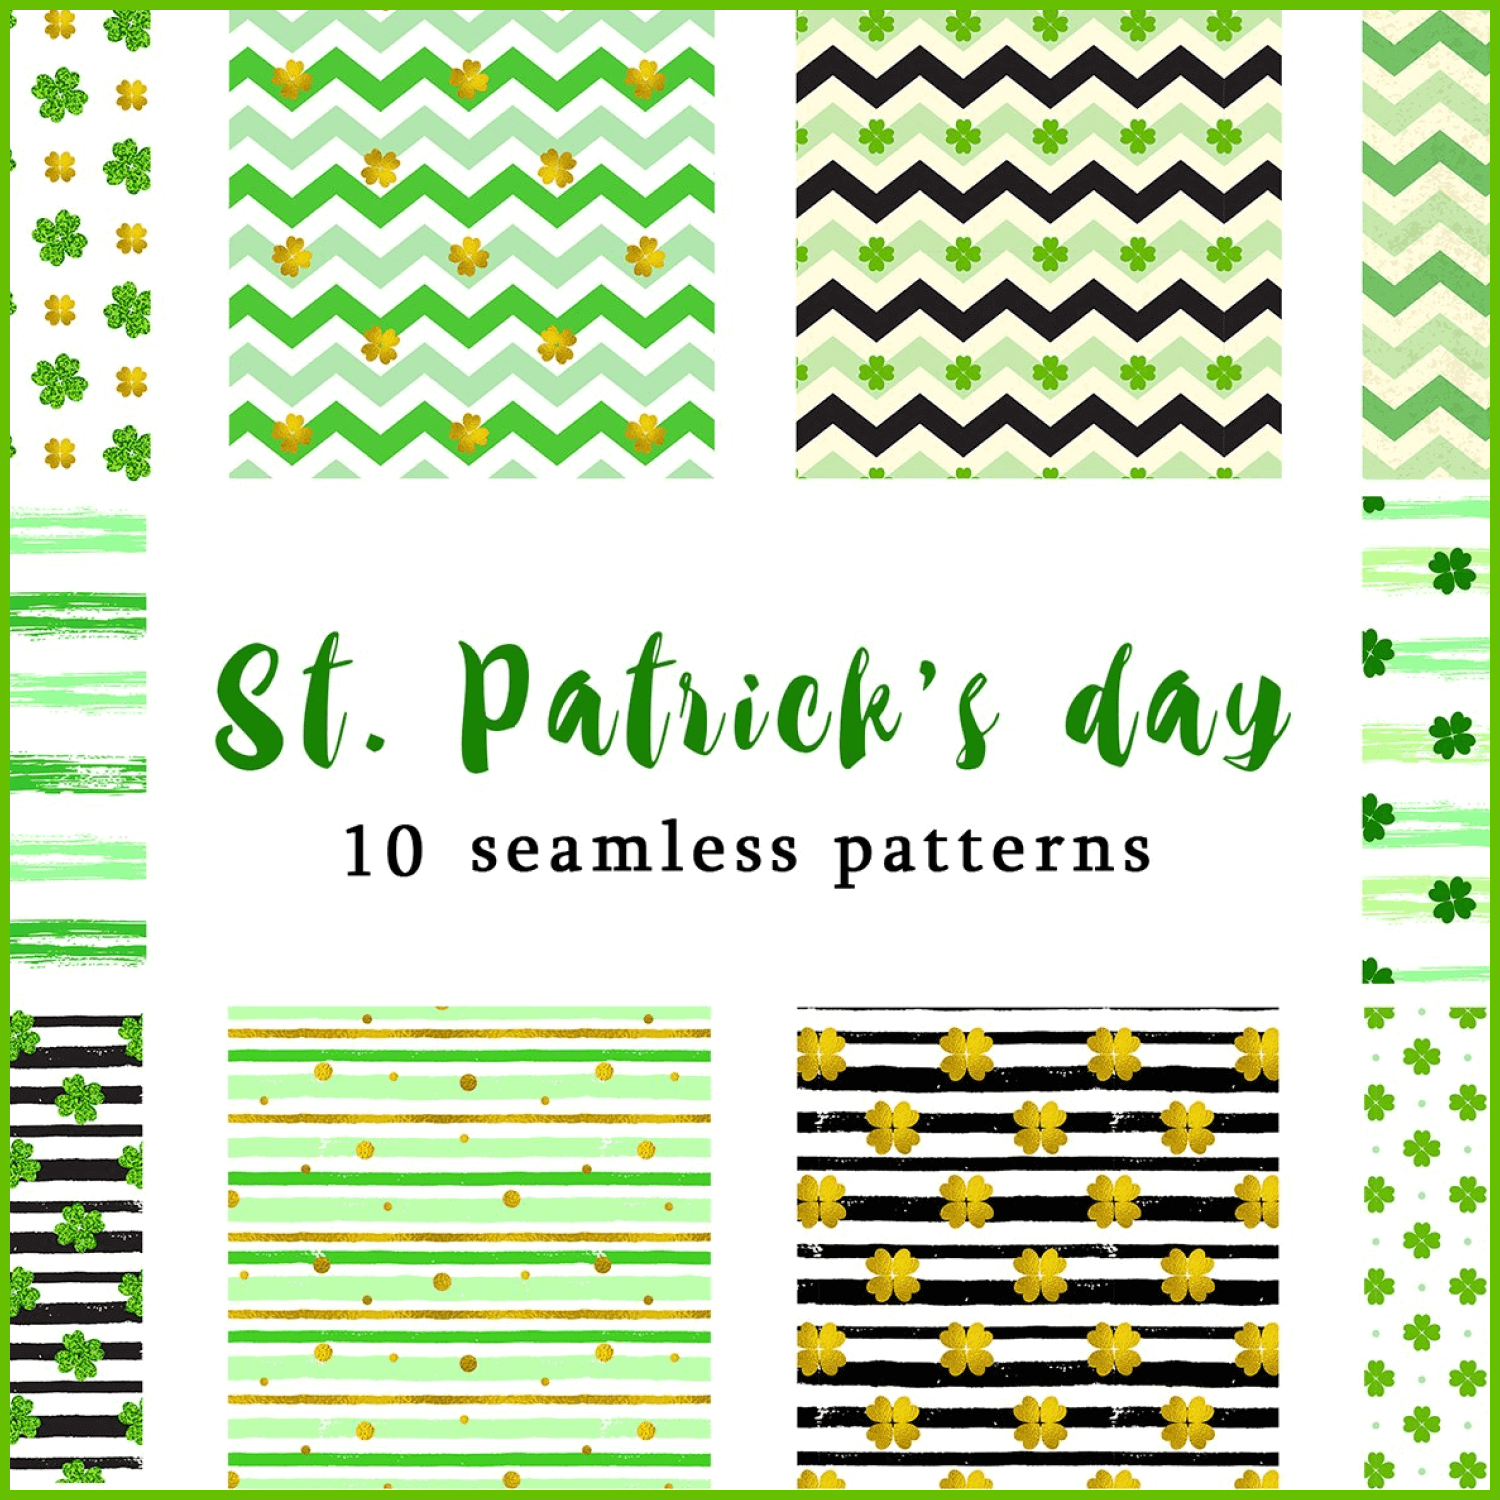 Patterns for St. Patricks Day.